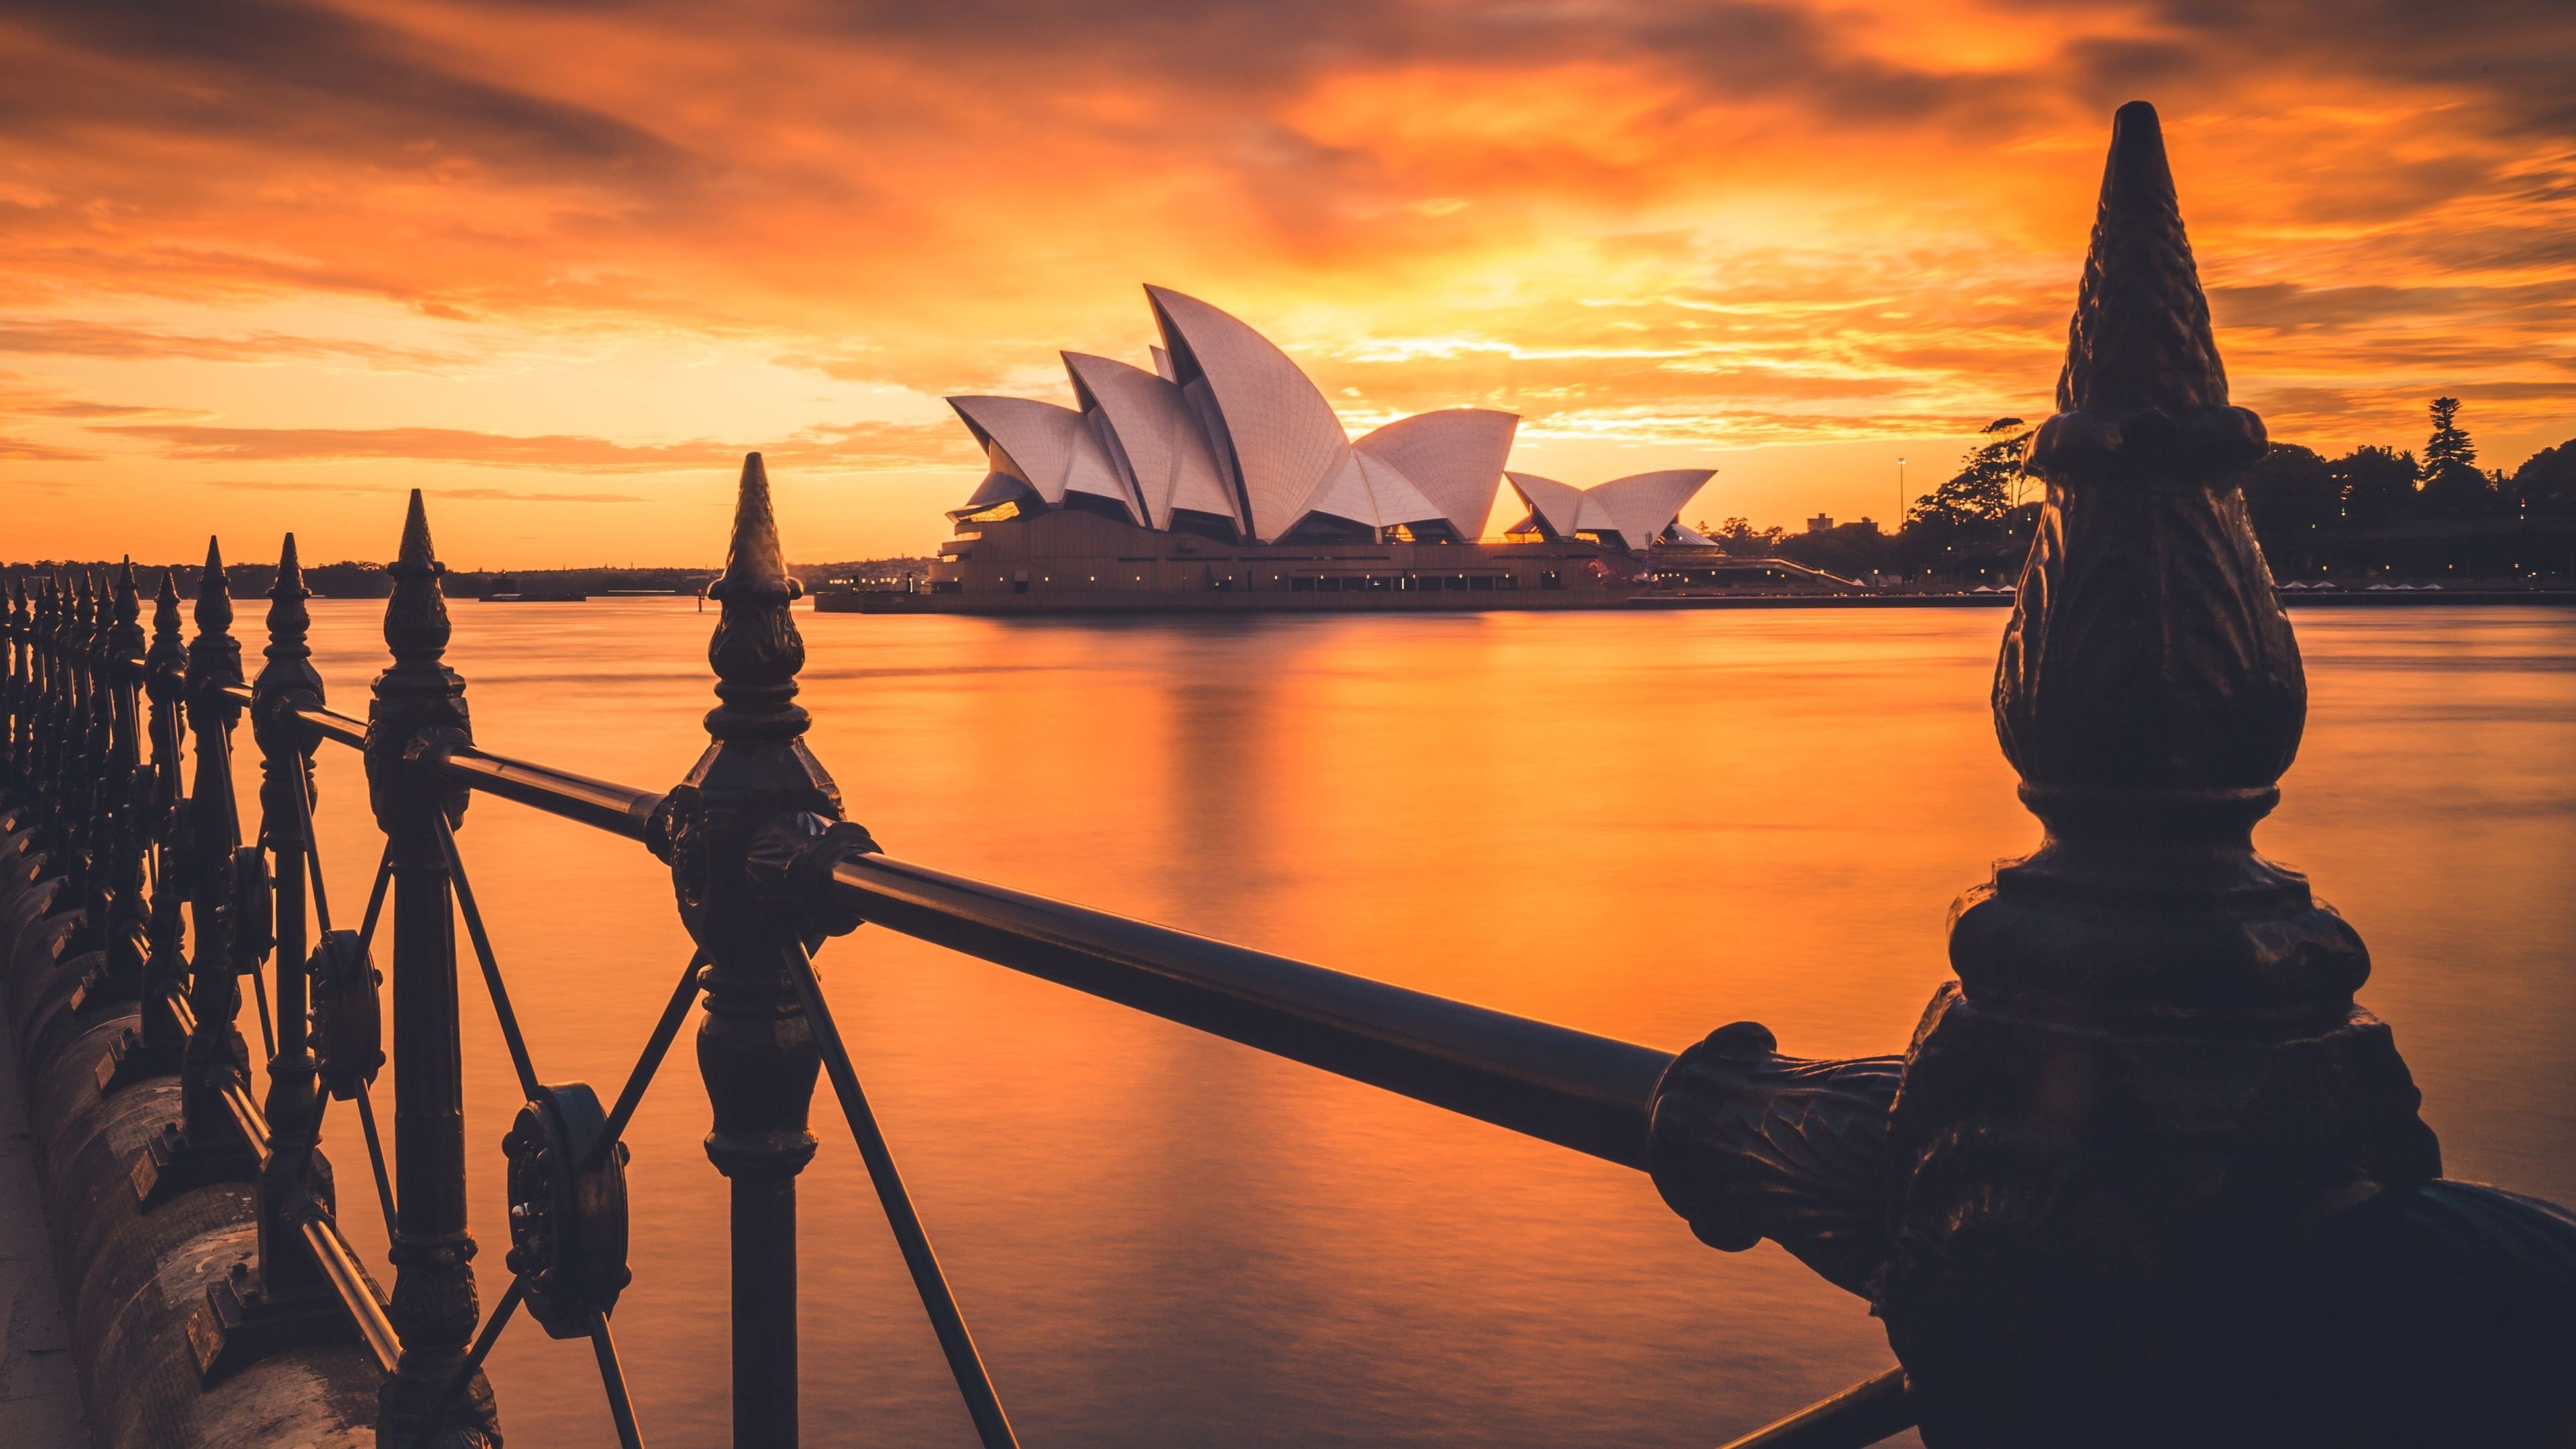 Sydney Opera House, 4K wallpapers, Sydney travel, Australia destinations, 3840x2160 4K Desktop